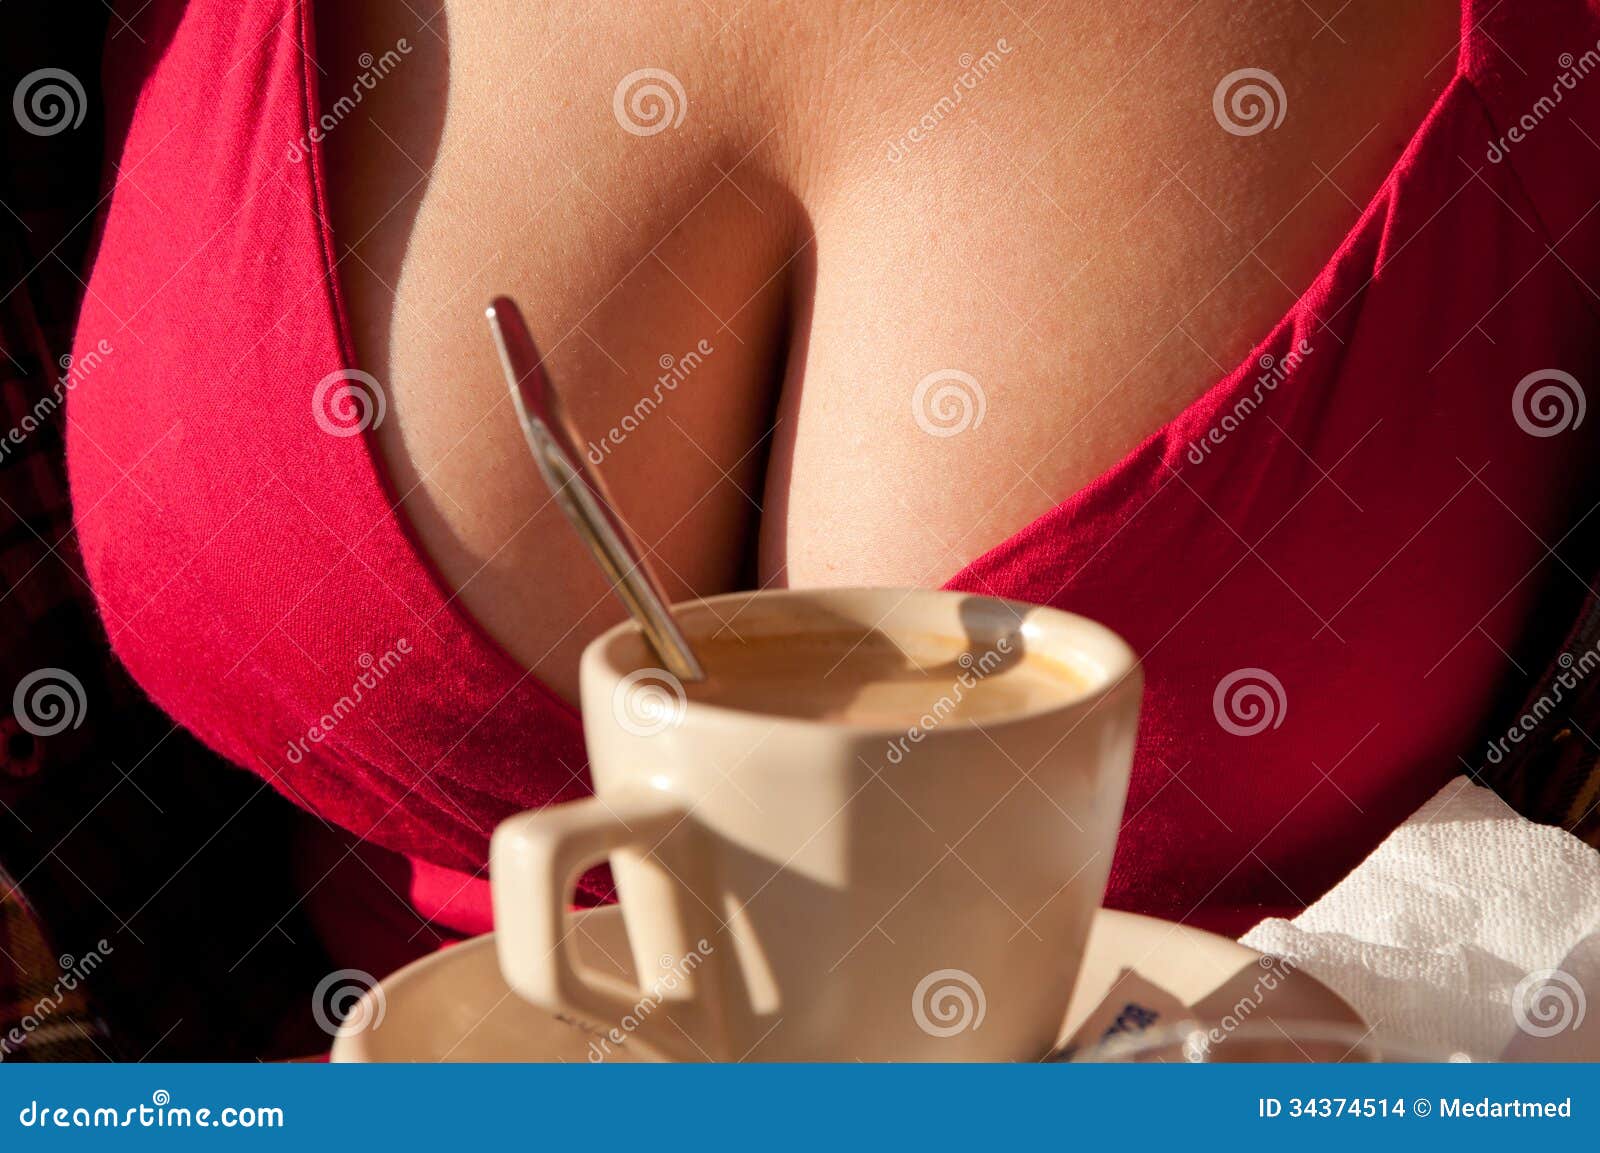 чашечки на женской груди фото 21